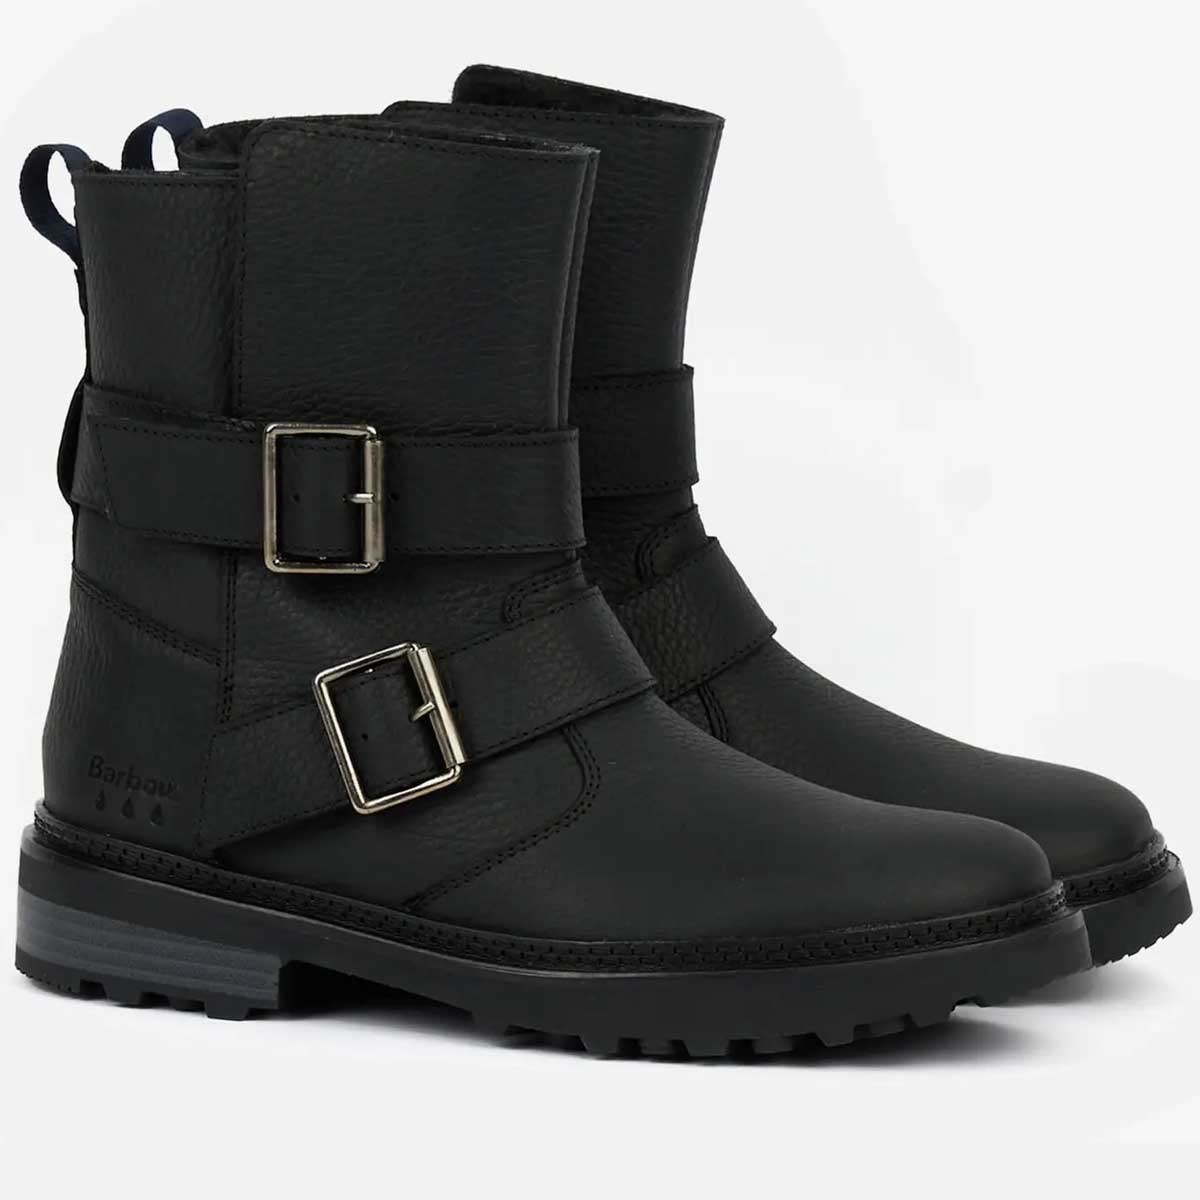 50% OFF BARBOUR Spear Fur Lined Boots - Ladies - Black - Size: 5 (EU38) (NO BOX)